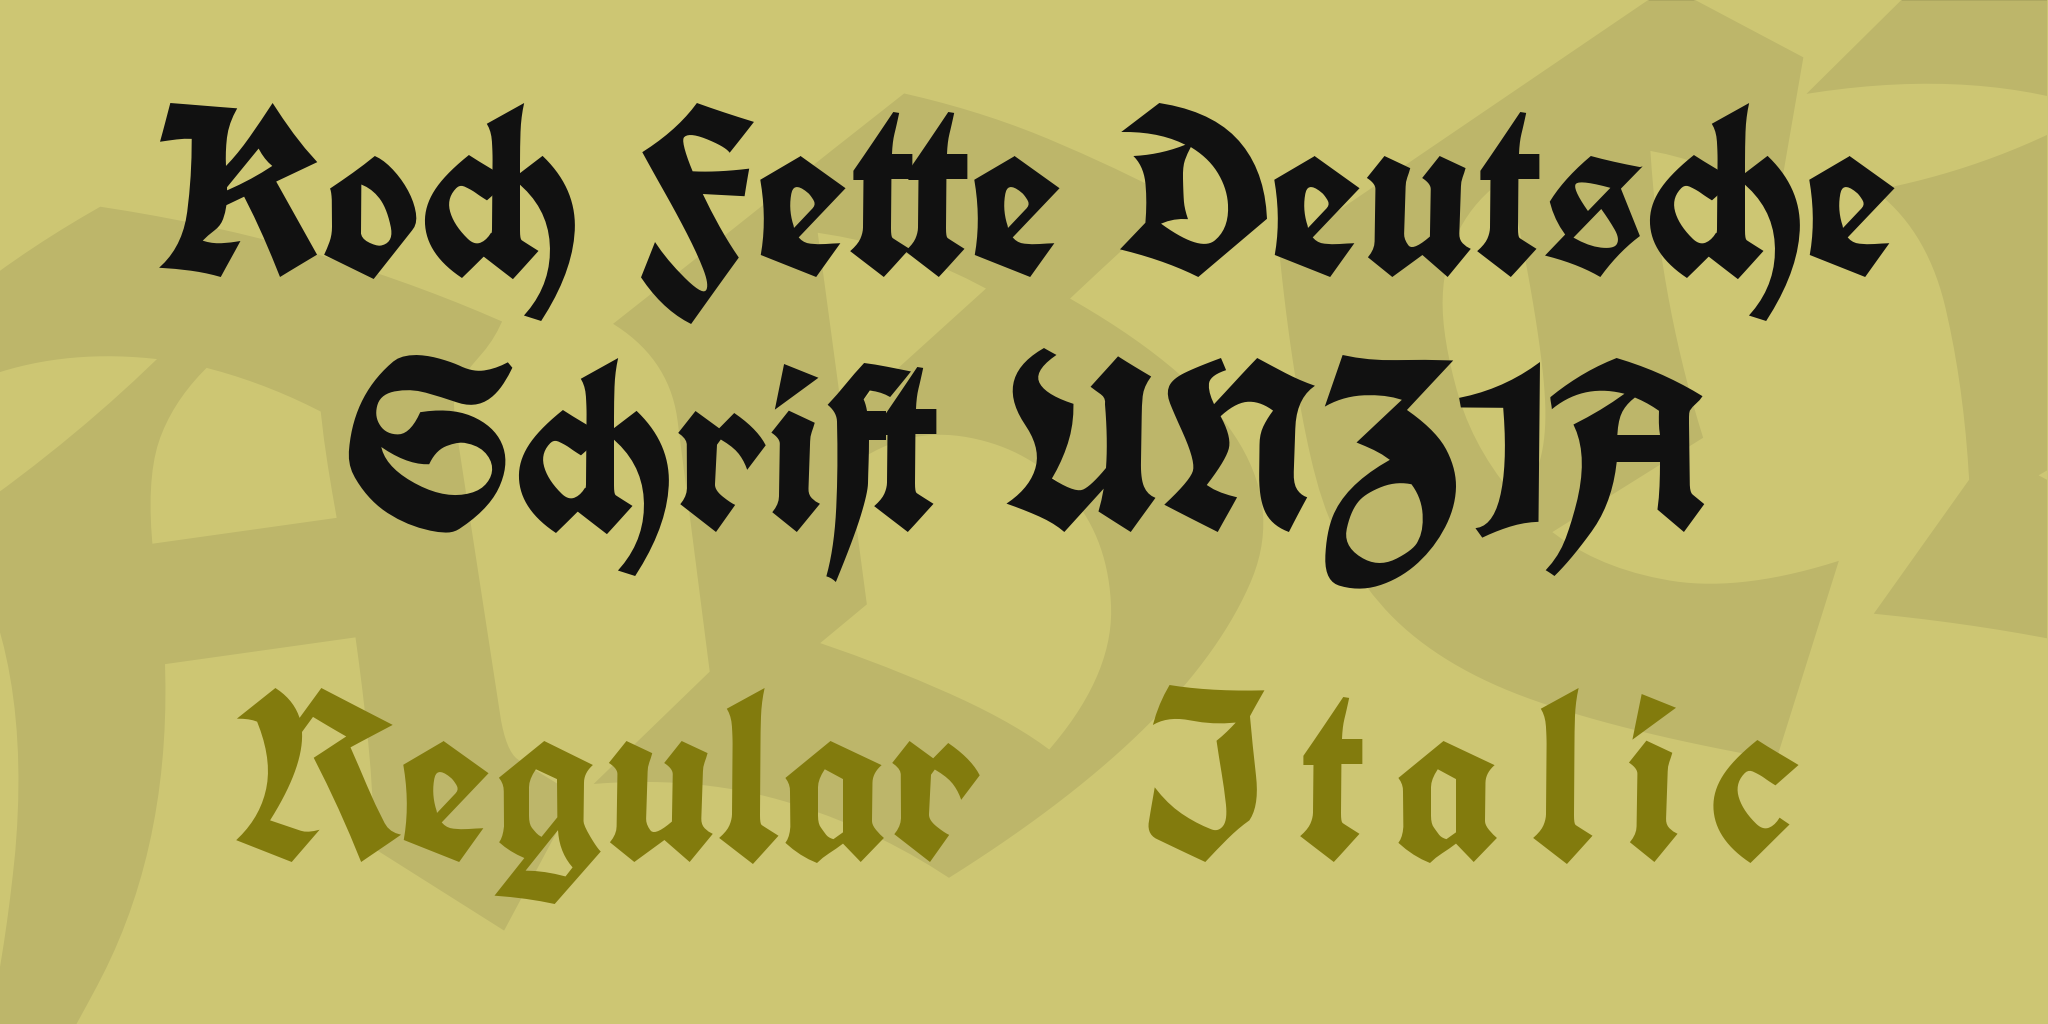 Koch Fette Deutsche Schrift Unz 1 A